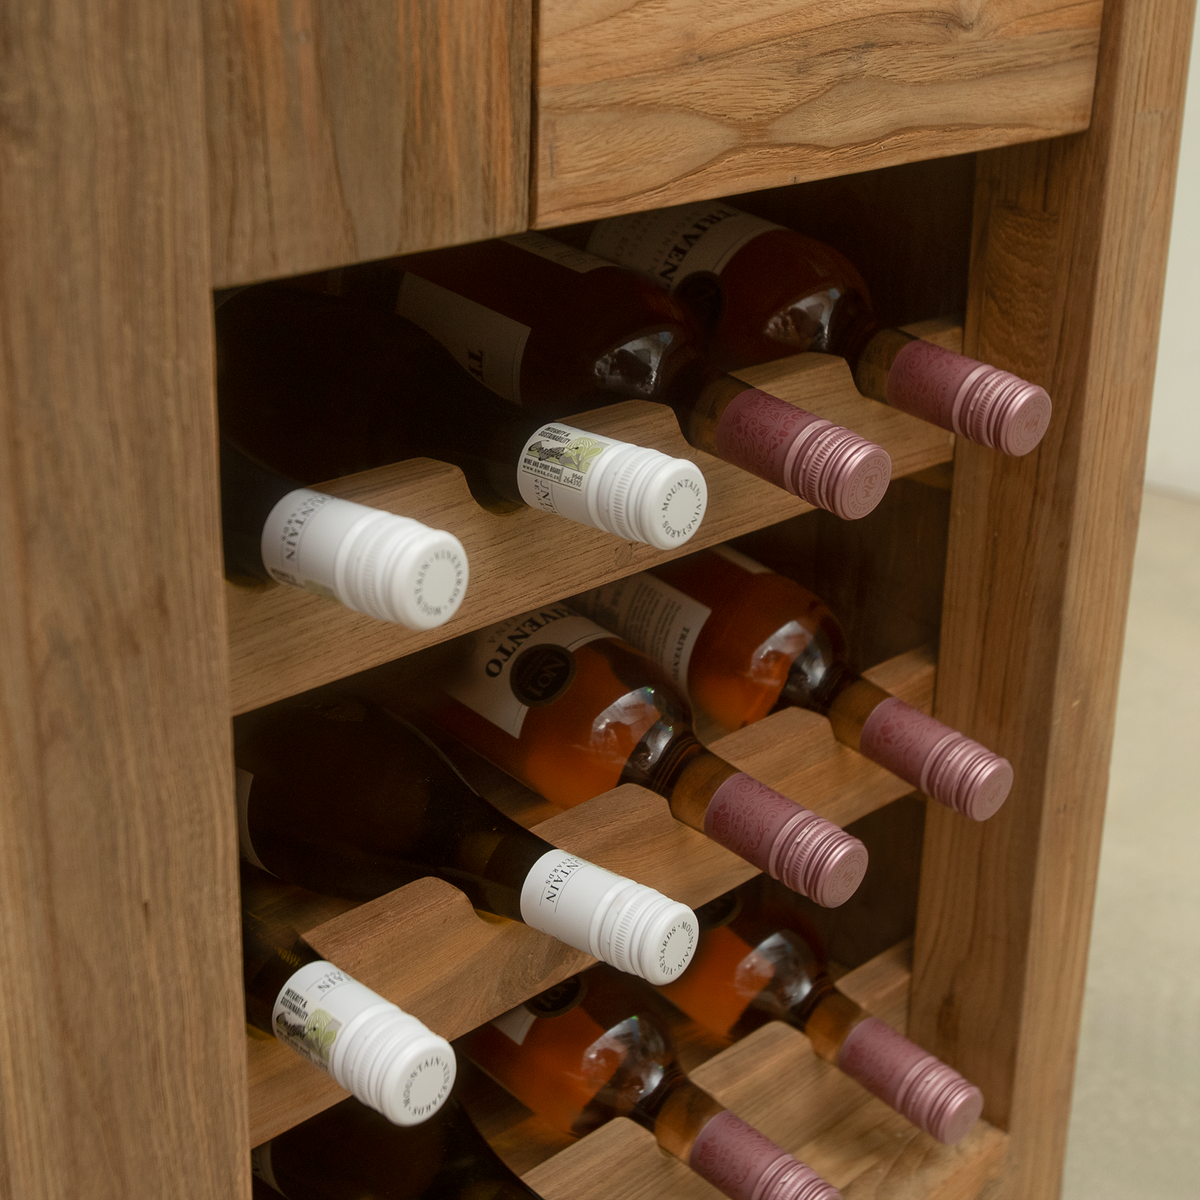 Draco Grills Teak Modular Outdoor Kitchen Wine Cabinet with Ceramic Top